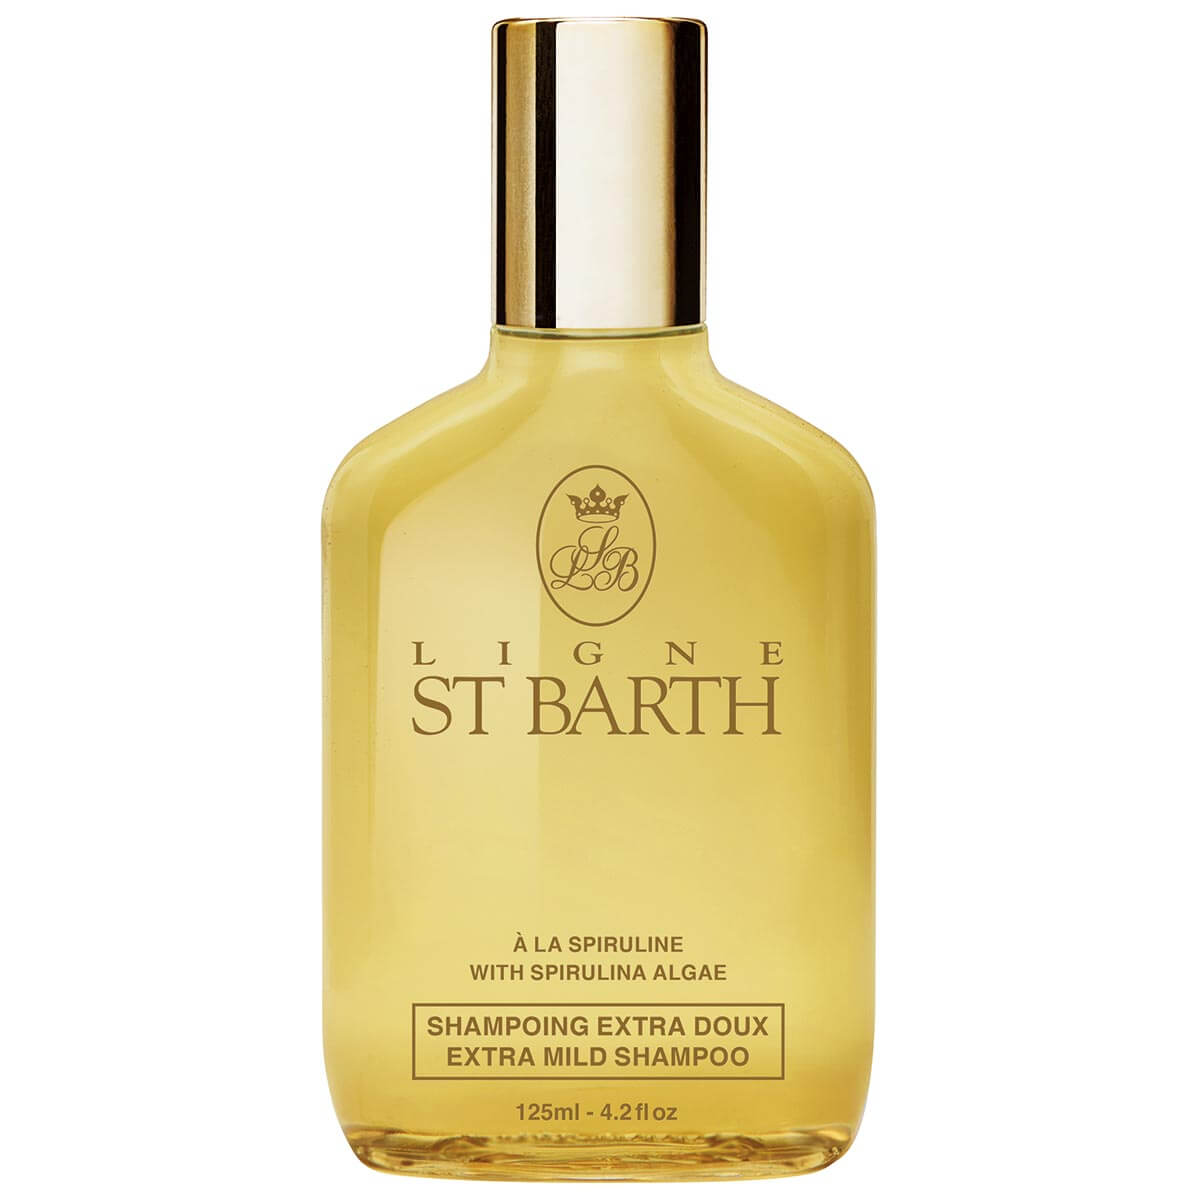 Ligne St Barth Extra Mild Shampoo with Spirulina Algea 125ml - интернет-магазин профессиональной косметики Spadream, изображение 36733